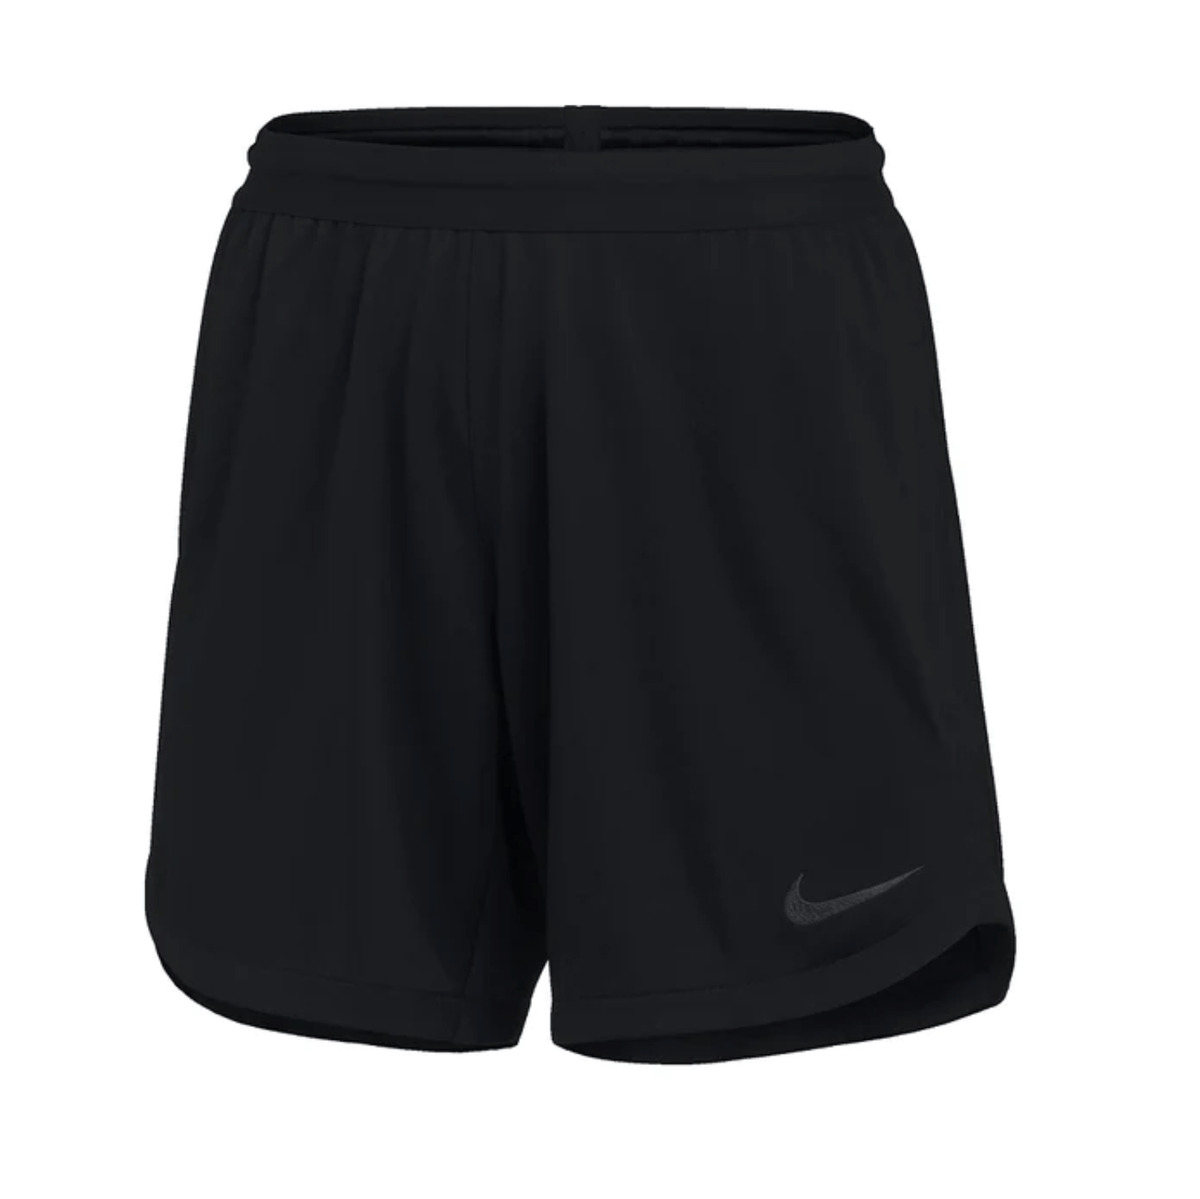 Nike women's Referee II shorts